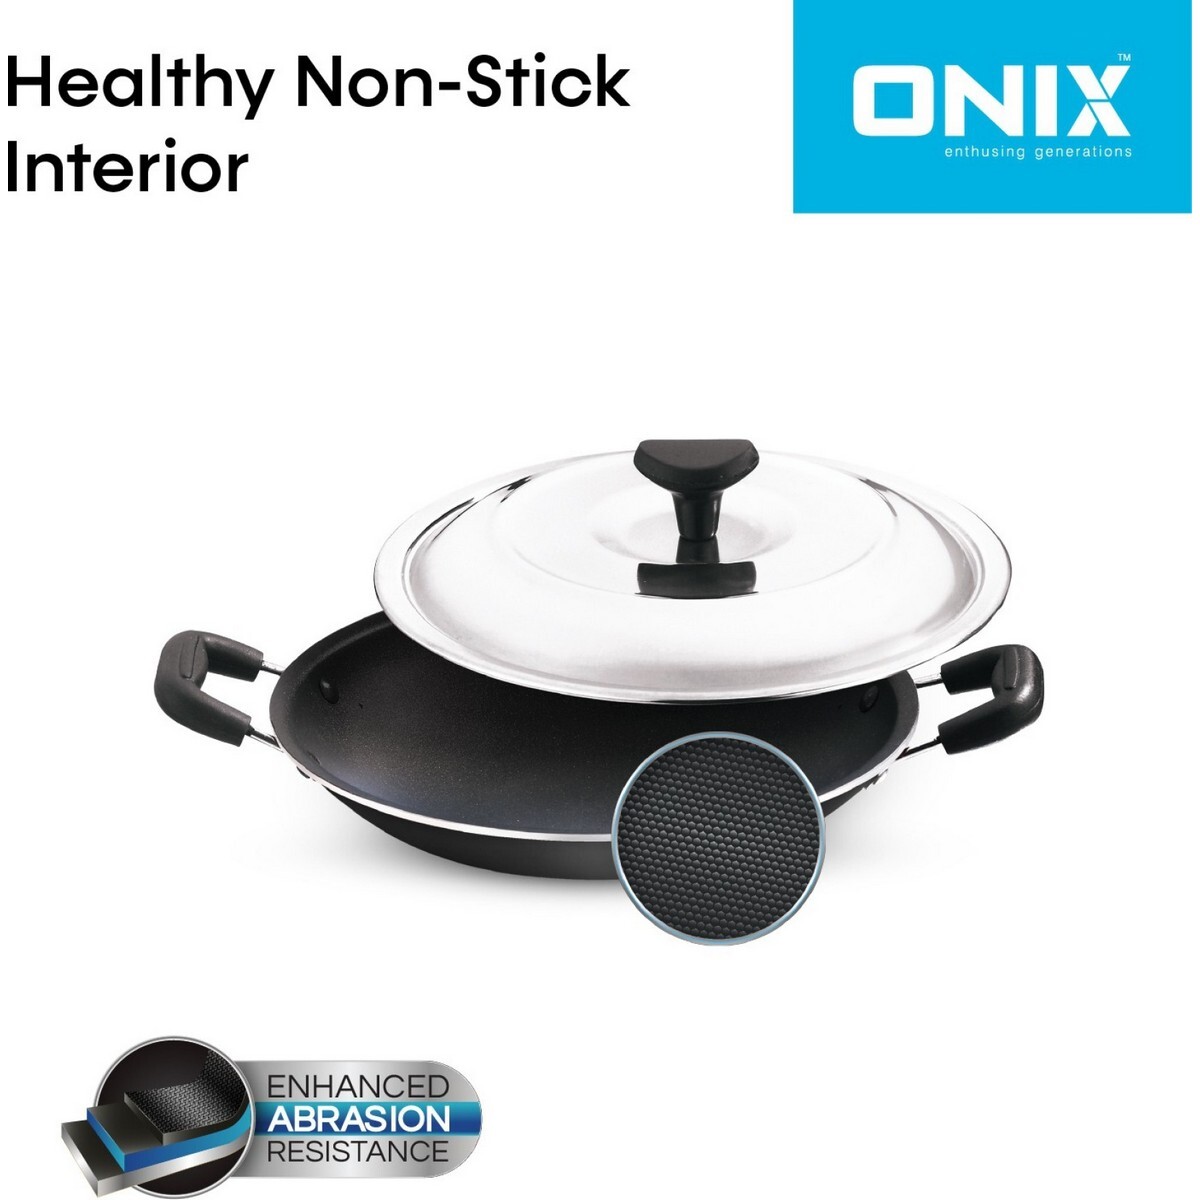 Onix Non Stick Appachatty OAC2040N